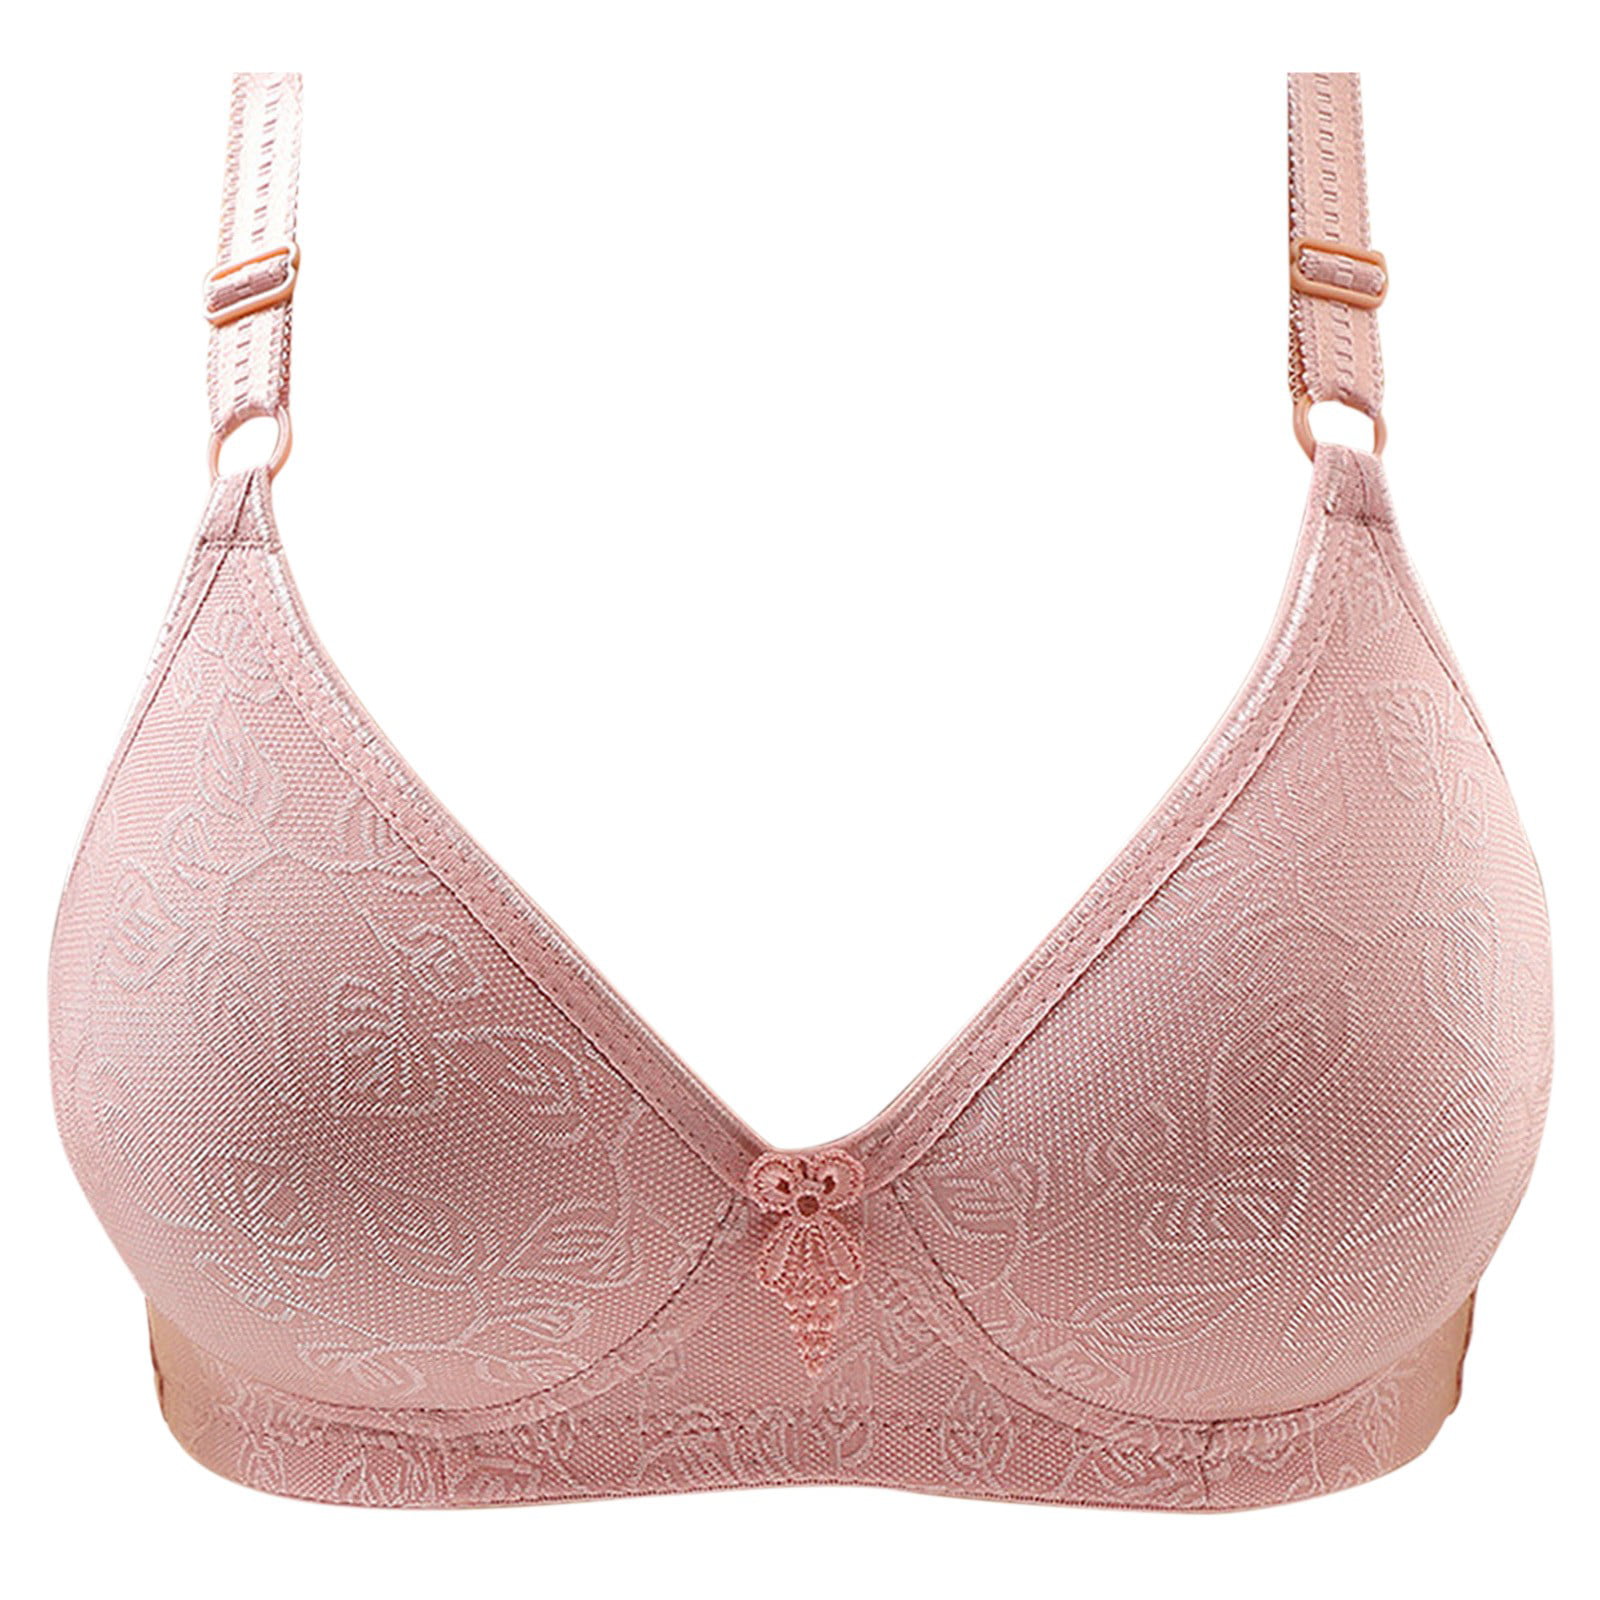  Womens Strapless Bra Silicone-Free Minimizer Bandeau Plus  Size Unlined Pink Gazelle Heather 42D